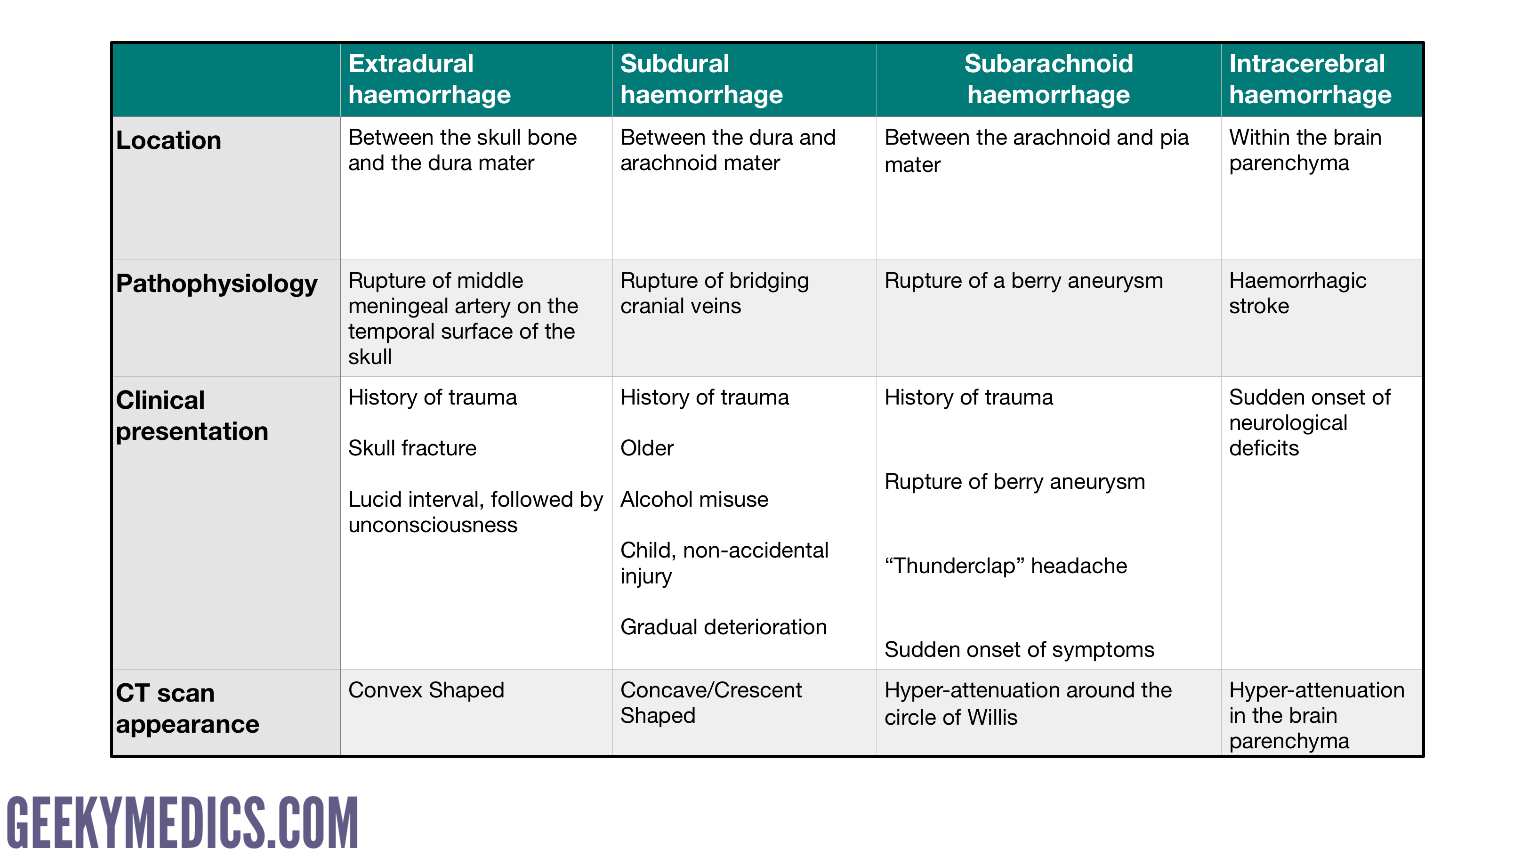 Subdural hematoma vs epidural hematoma